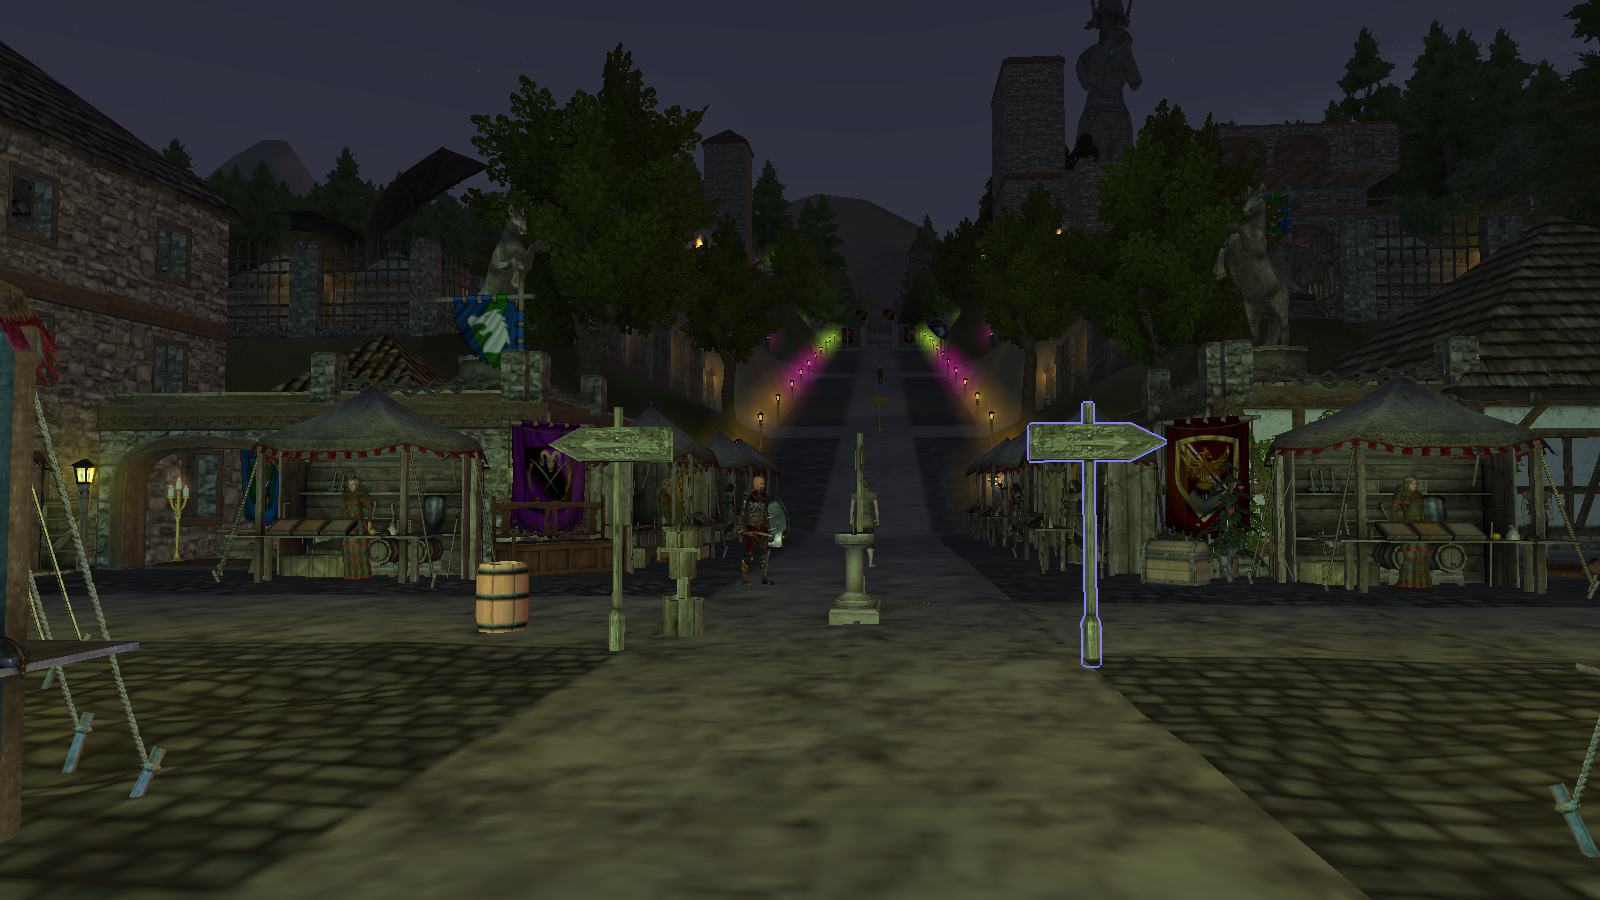 Image: Main street and market stalls